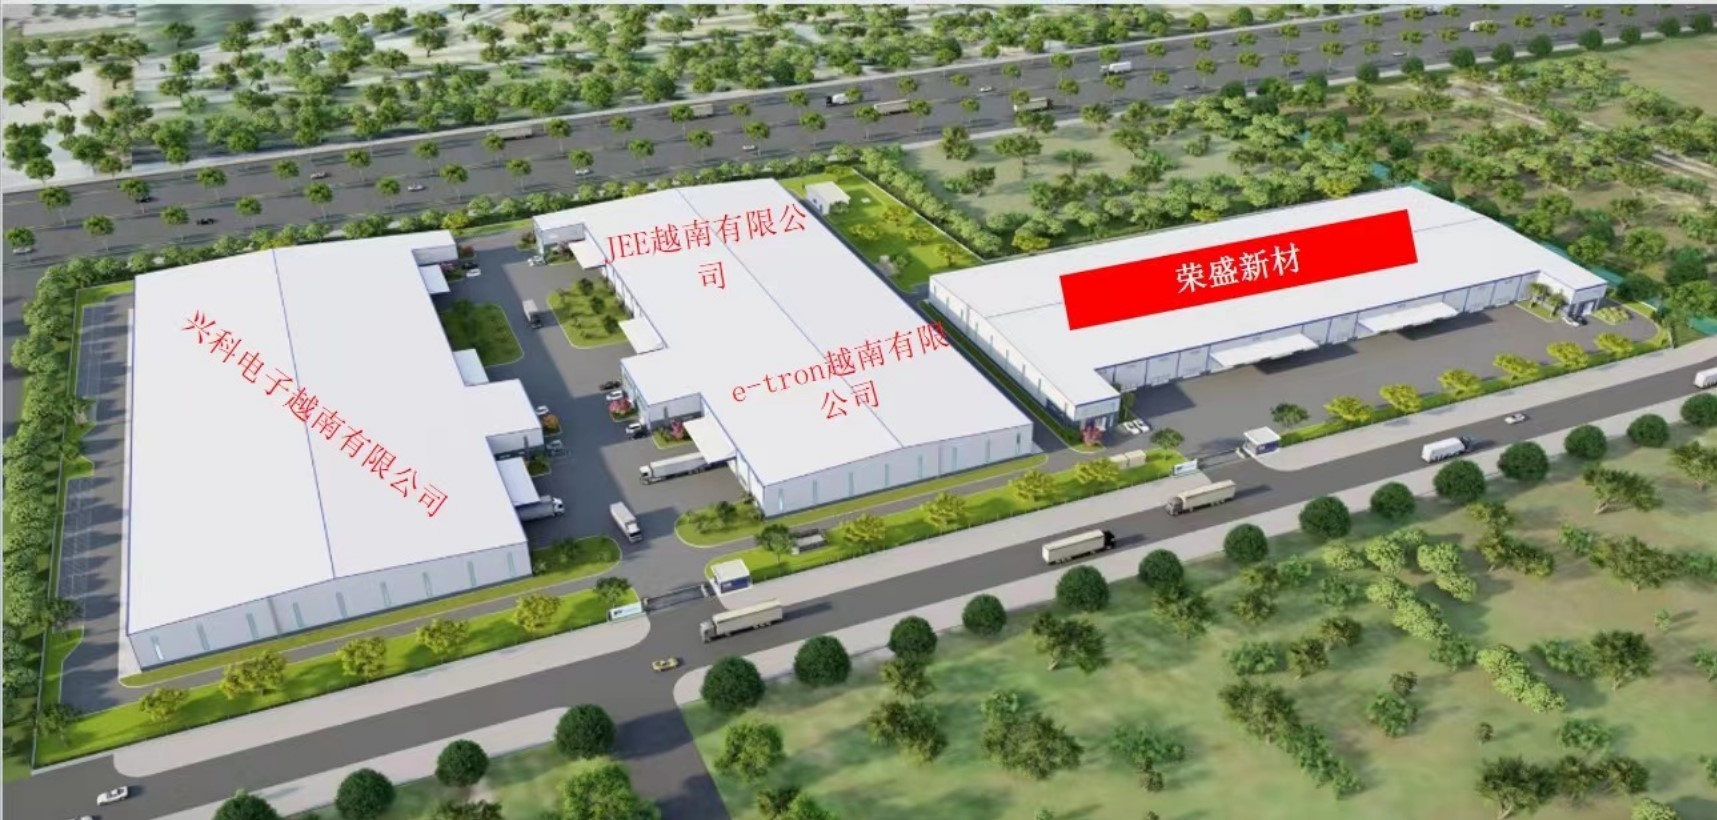 Shanghai Huitian New Material Co., Ltd 工場生産ライン